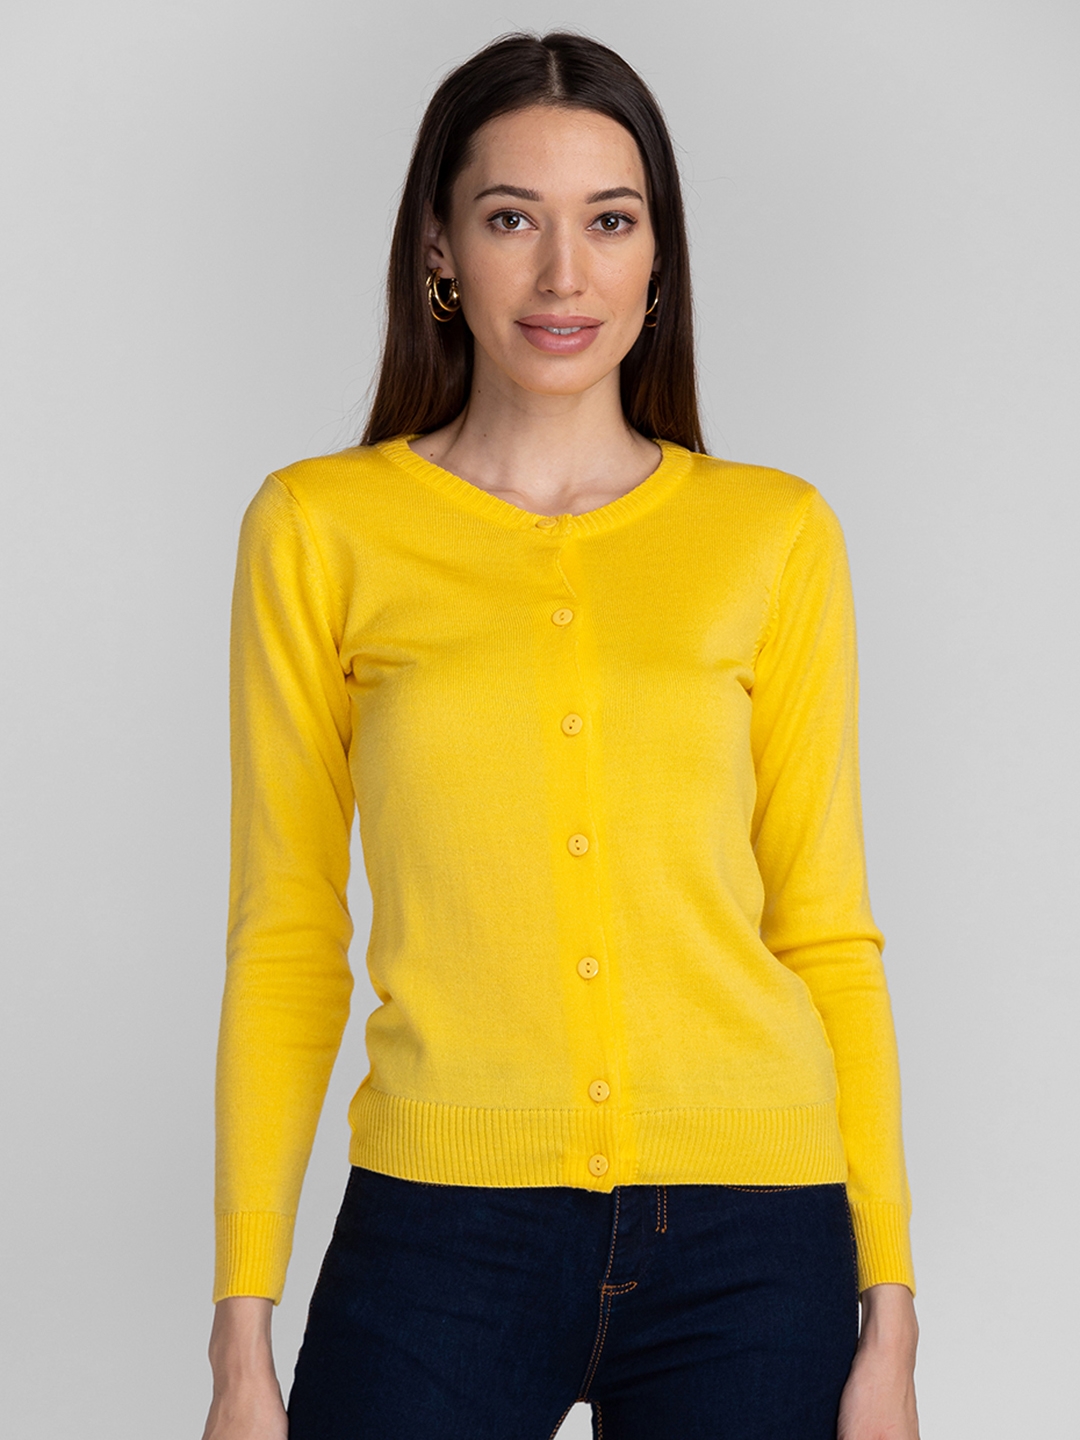 Globus Yellow Solid Cardigan Sweater